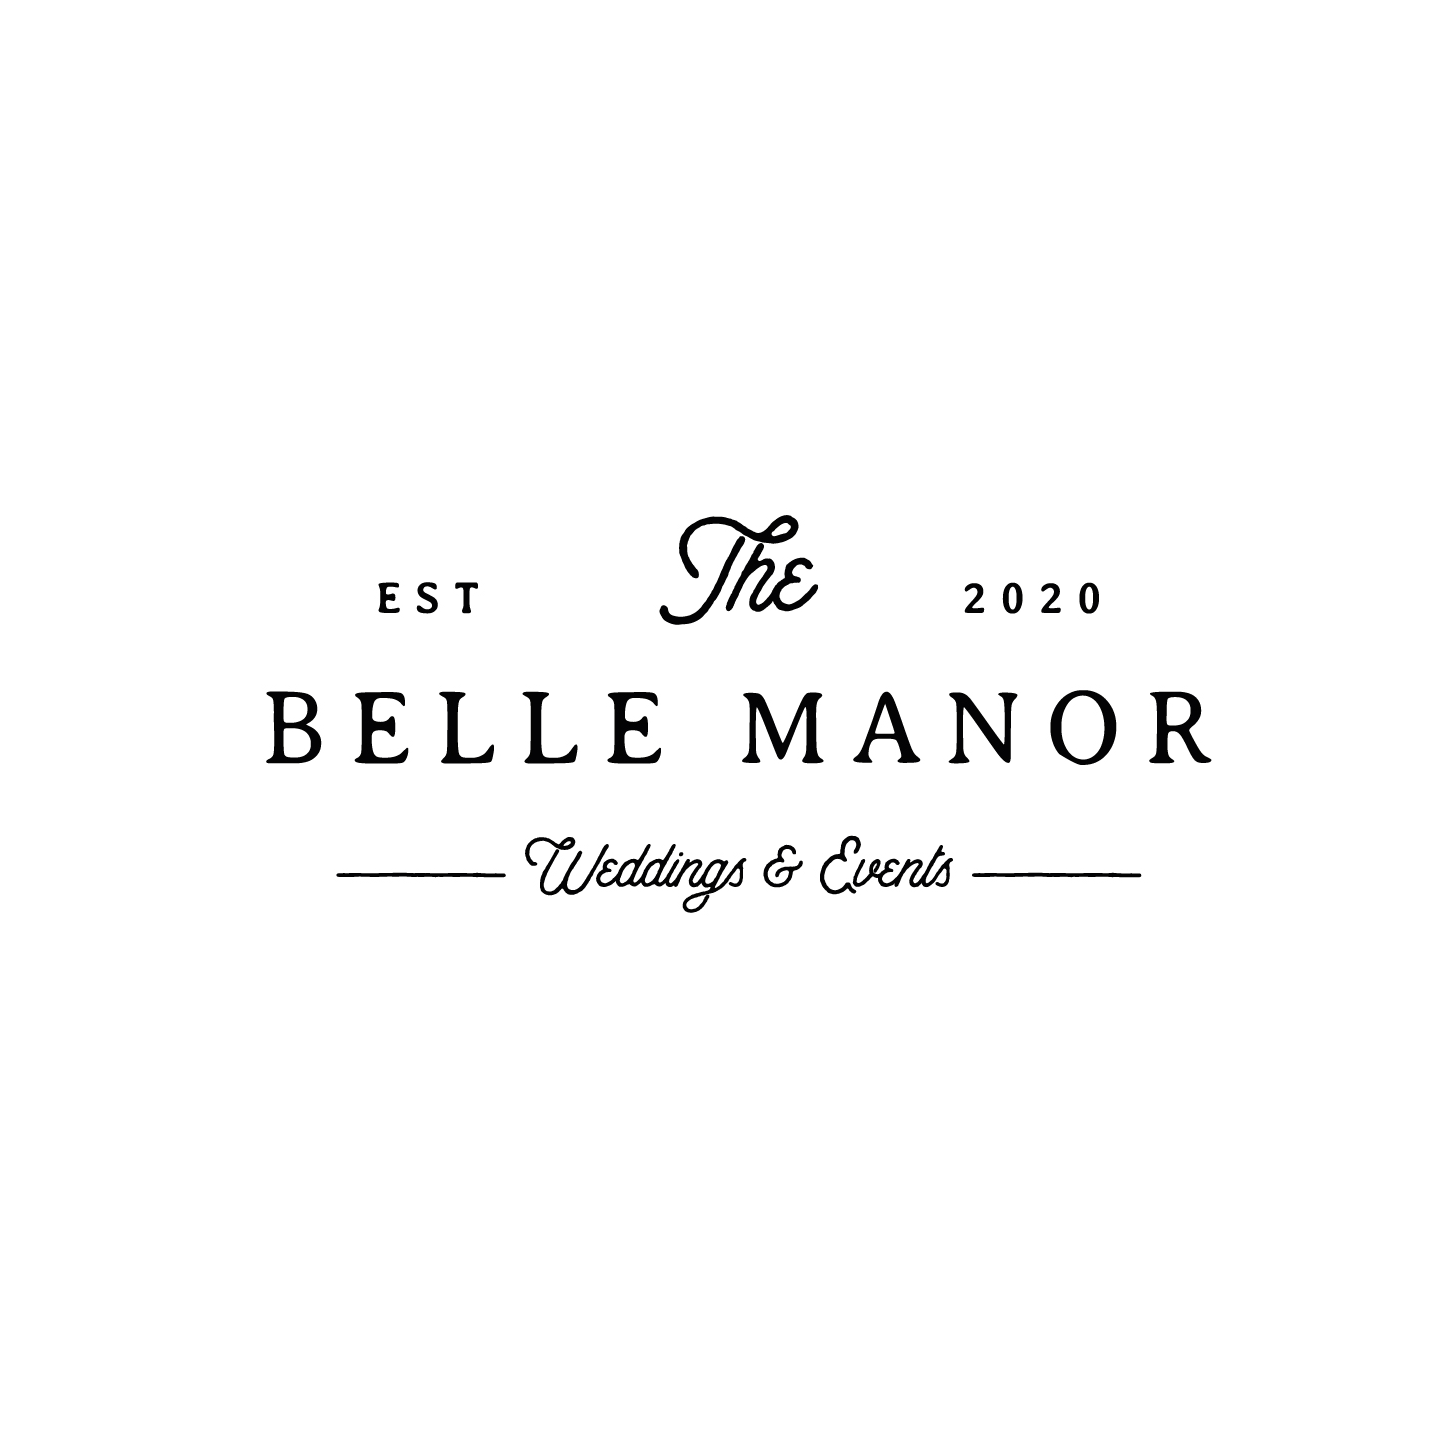 The Belle Manor logo